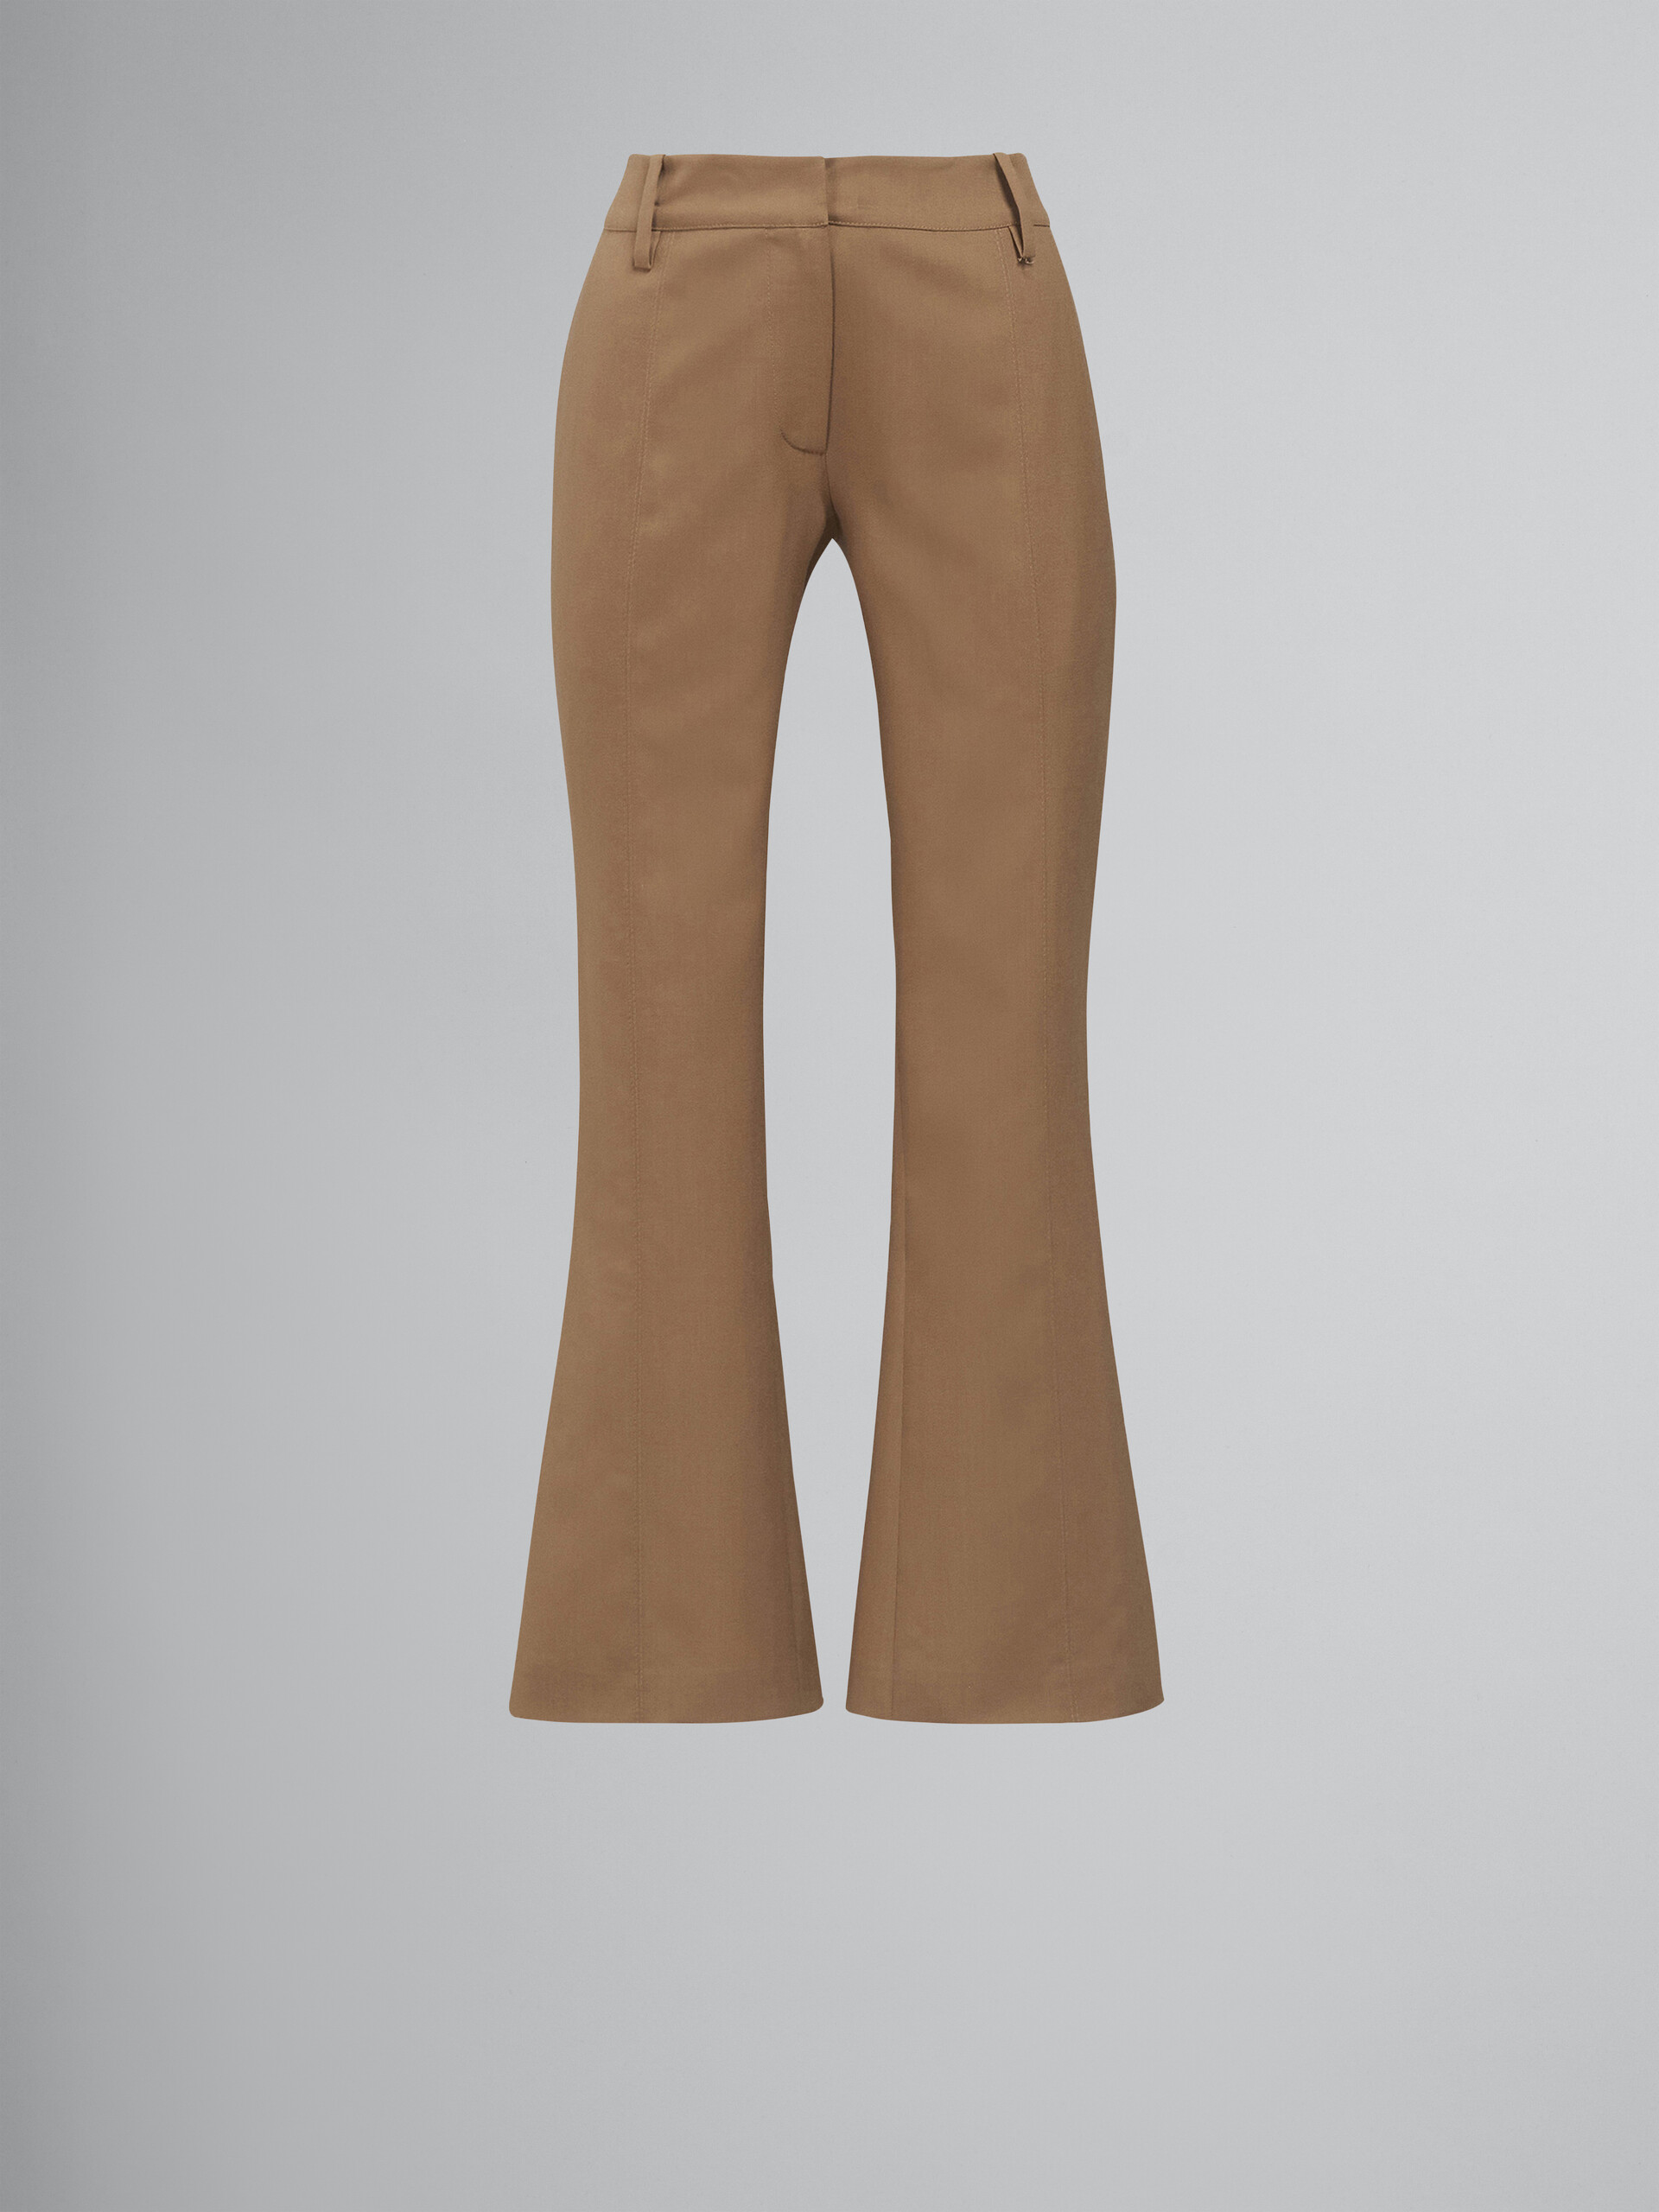 Tropical wool flared pants - Pants - Image 1